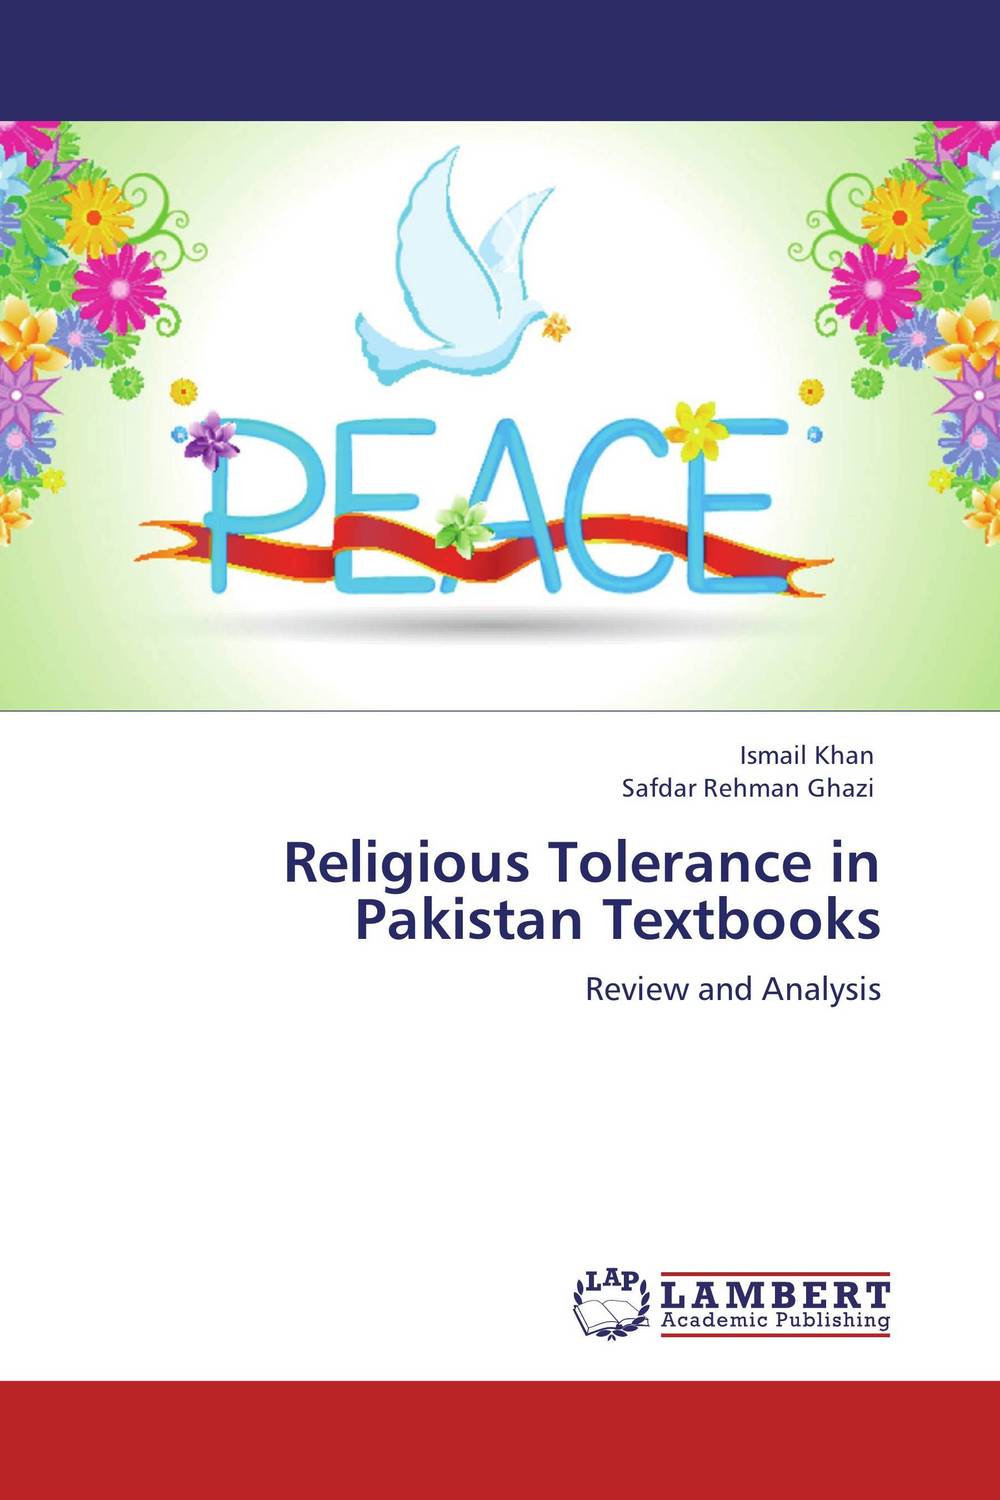 Religious Tolerance in Pakistan Textbooks